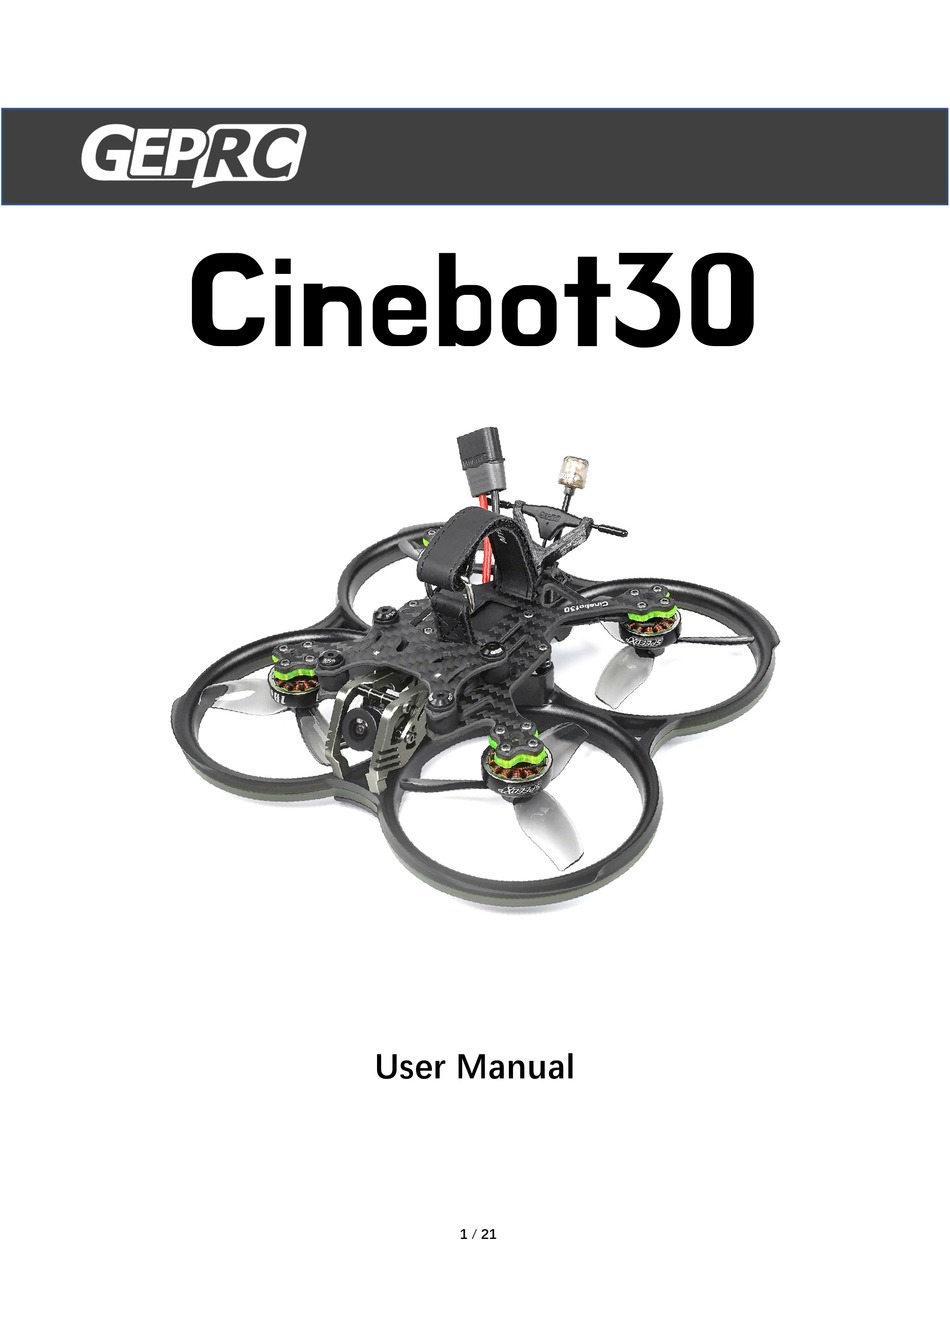 Cinebot 30. Cinebot. User manual квадрокоптер 1.0 CN. GEPRC cinebot25.